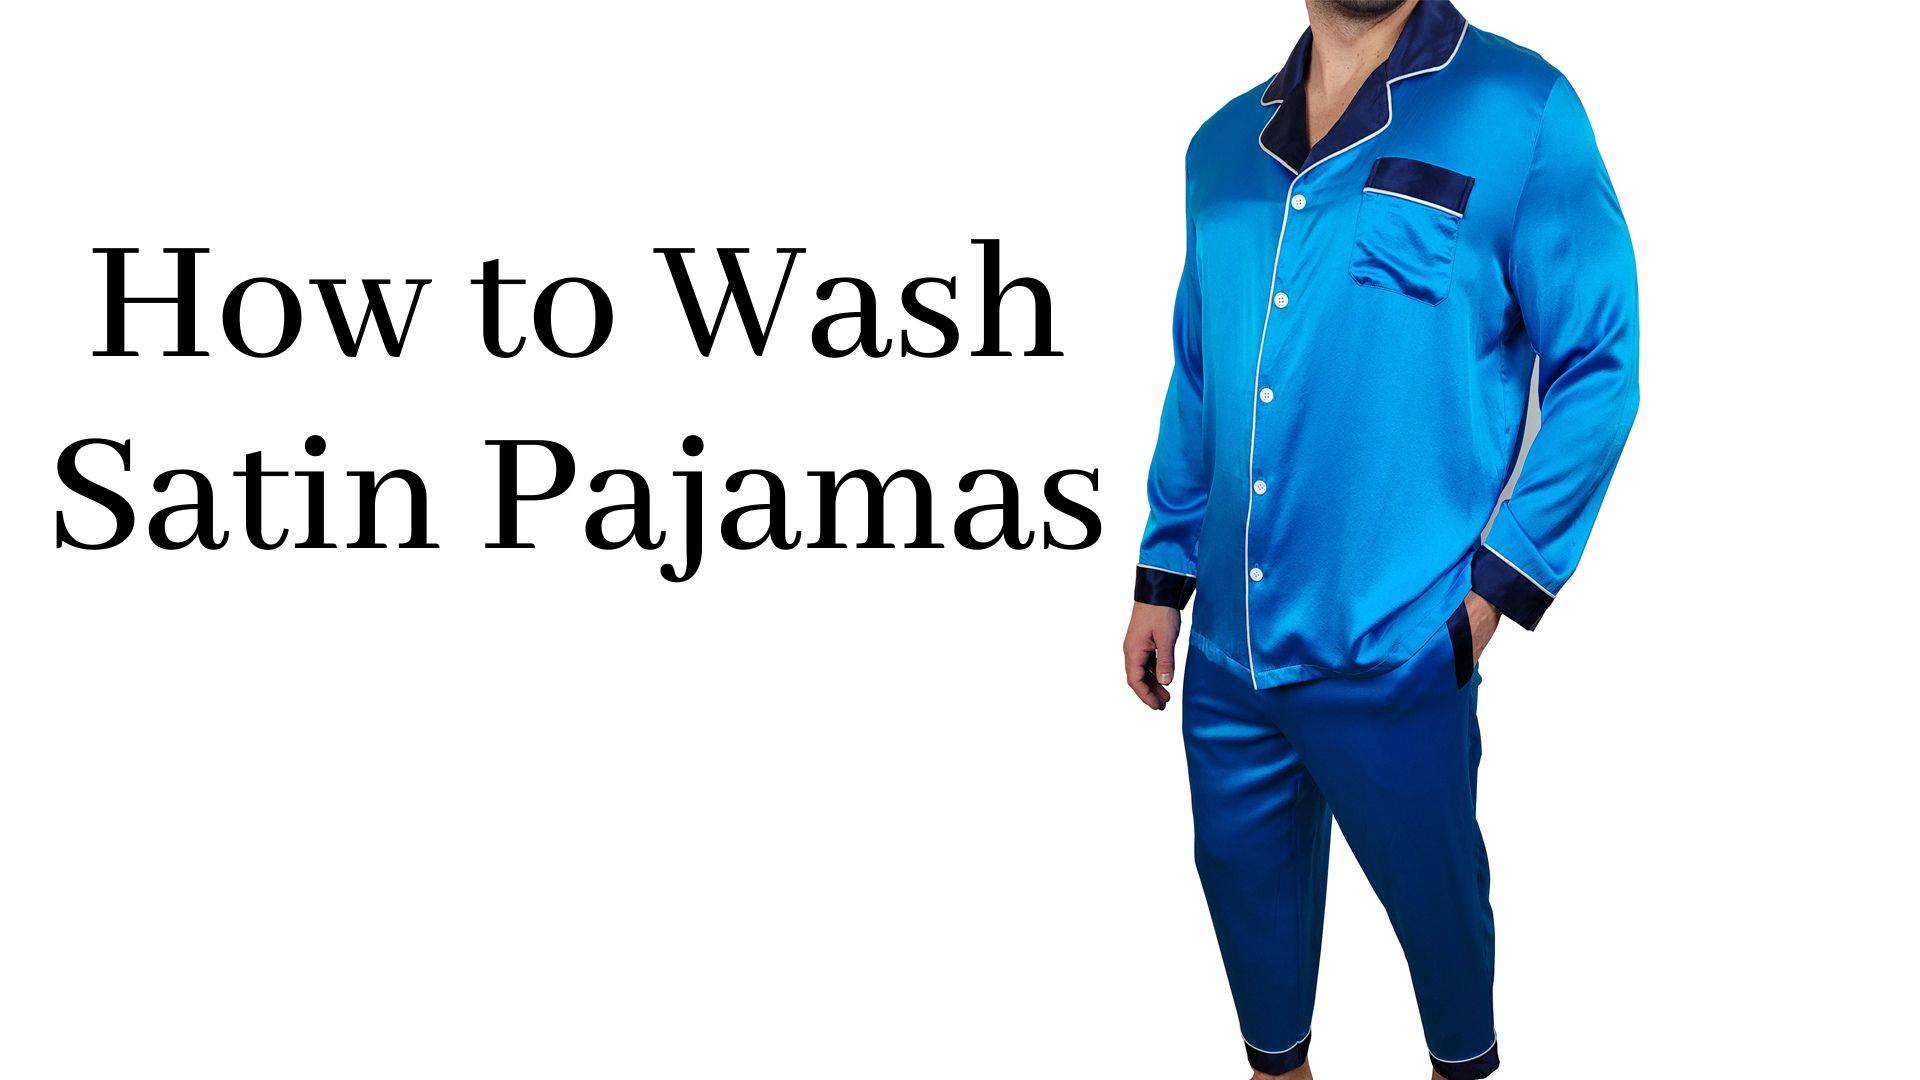 how to wash satin pajamas header image